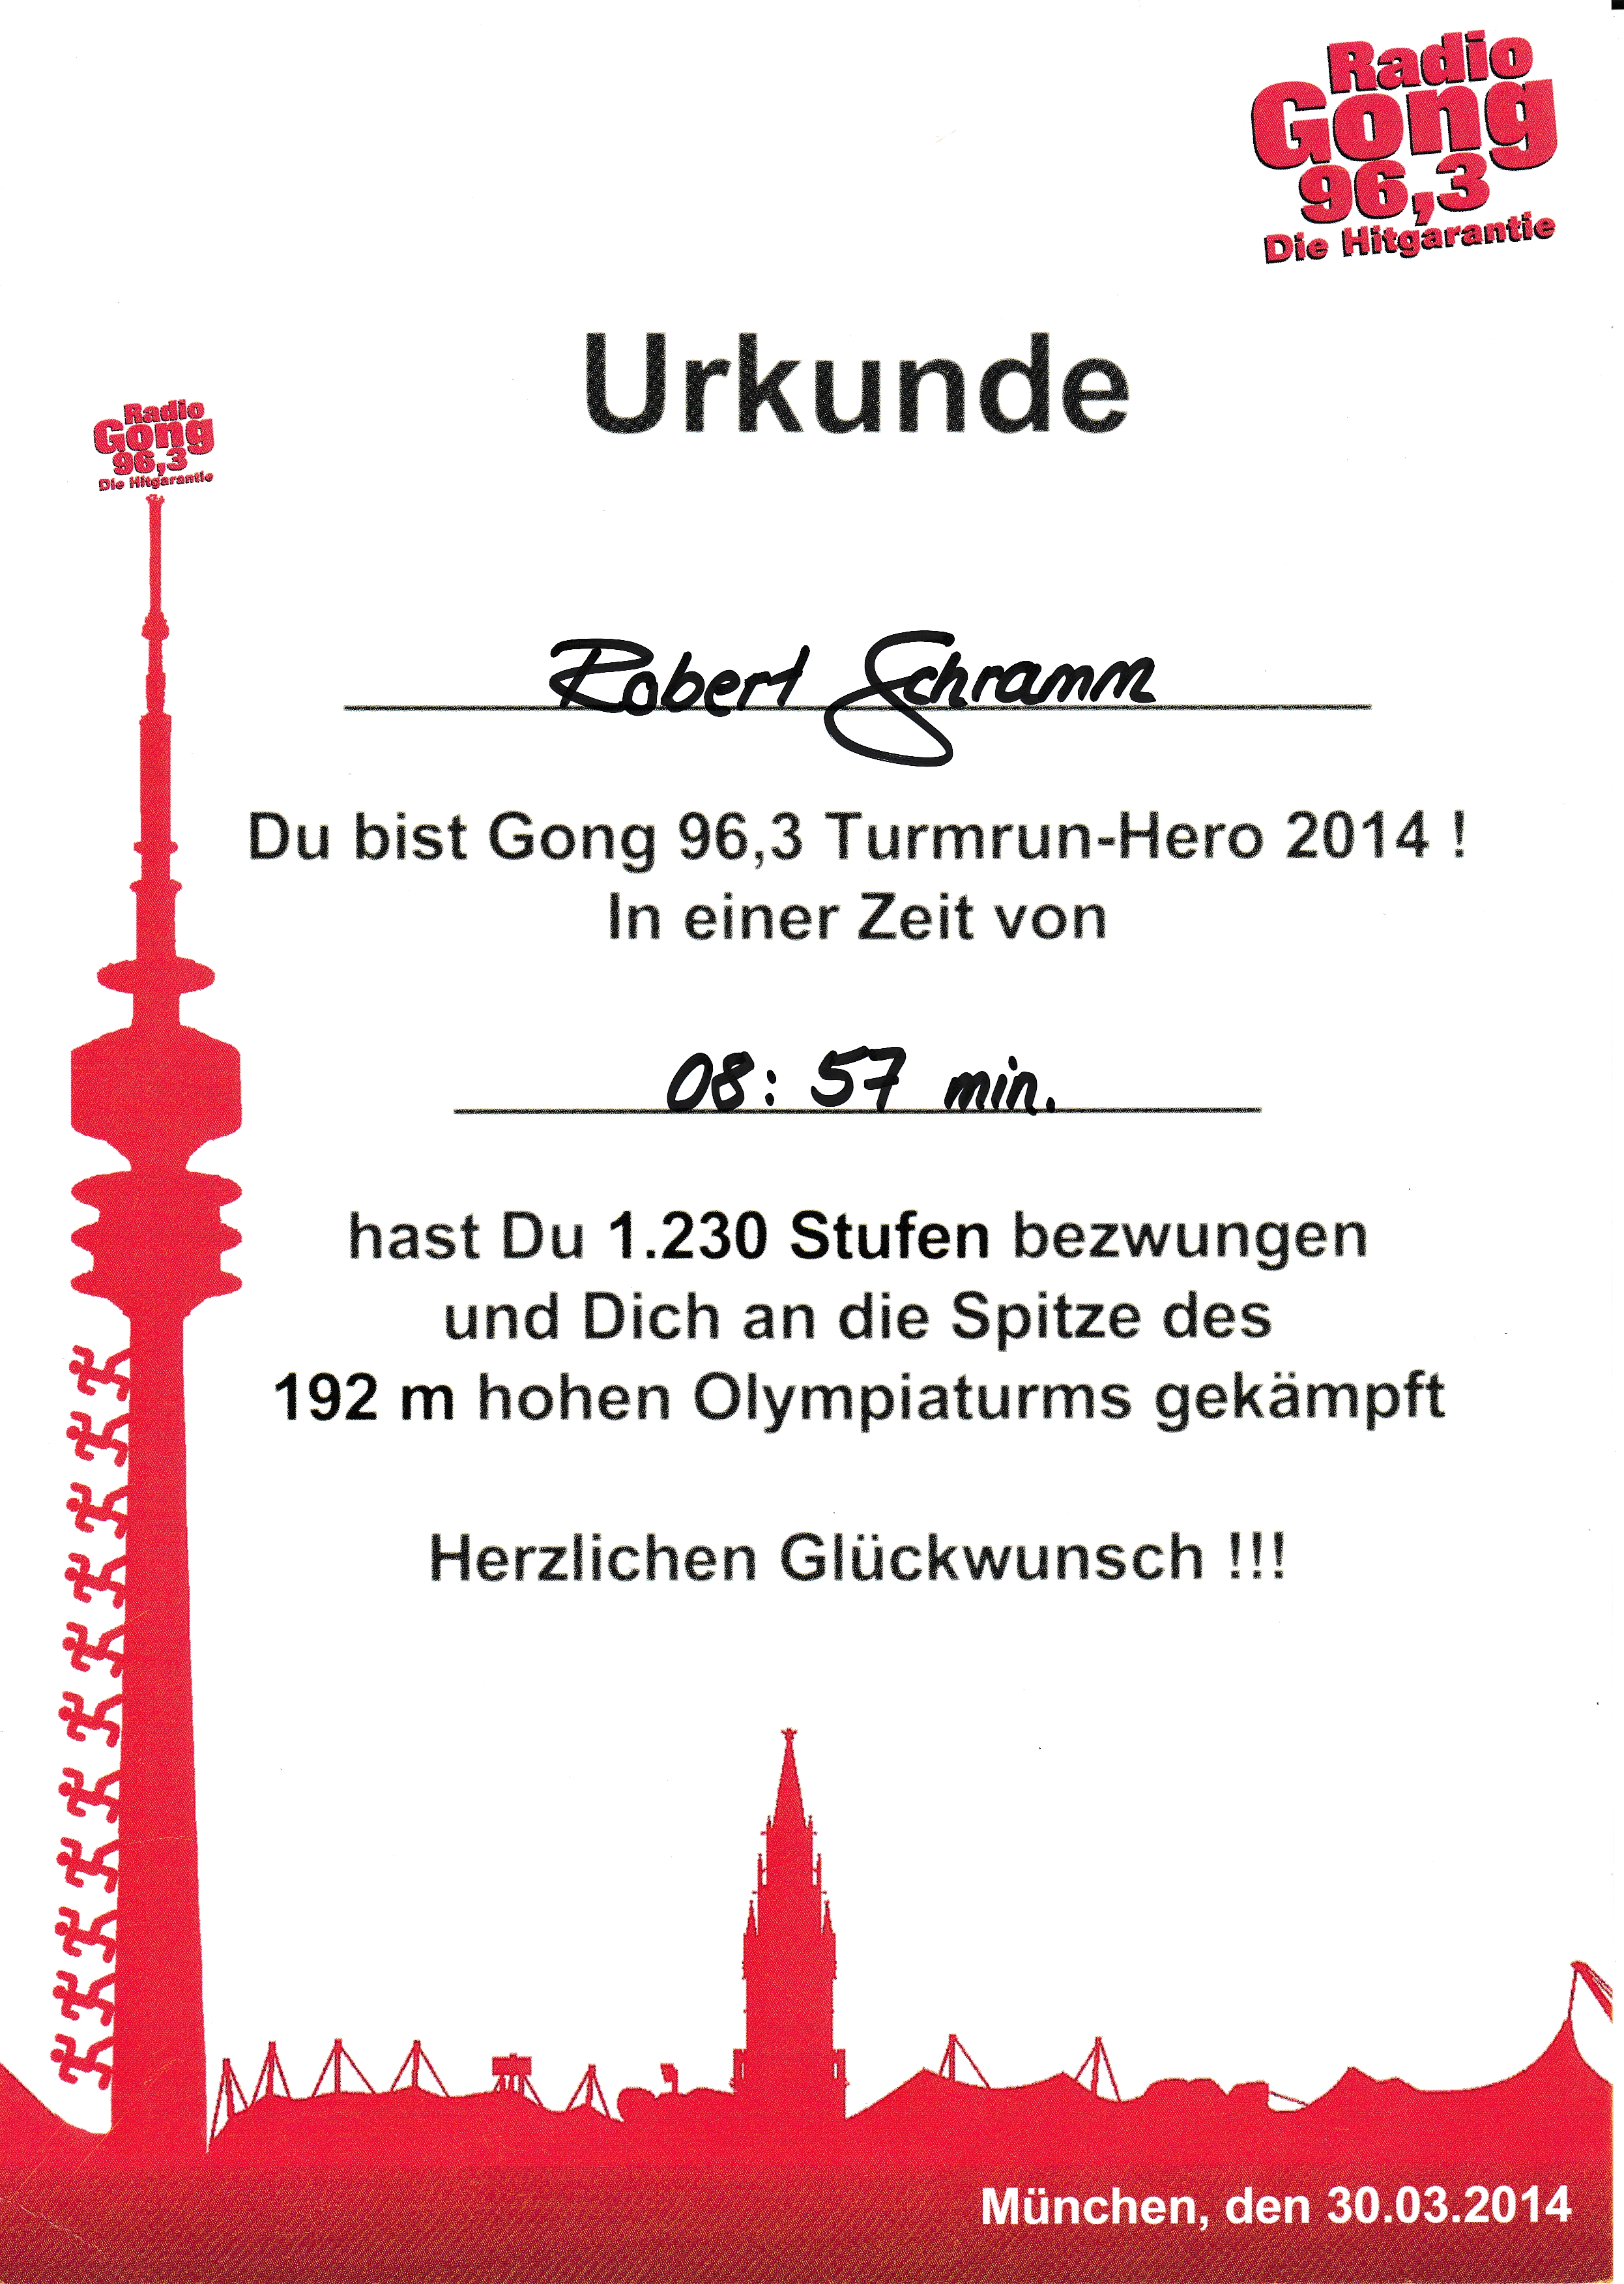 Urkunde Olympiaturm 2014